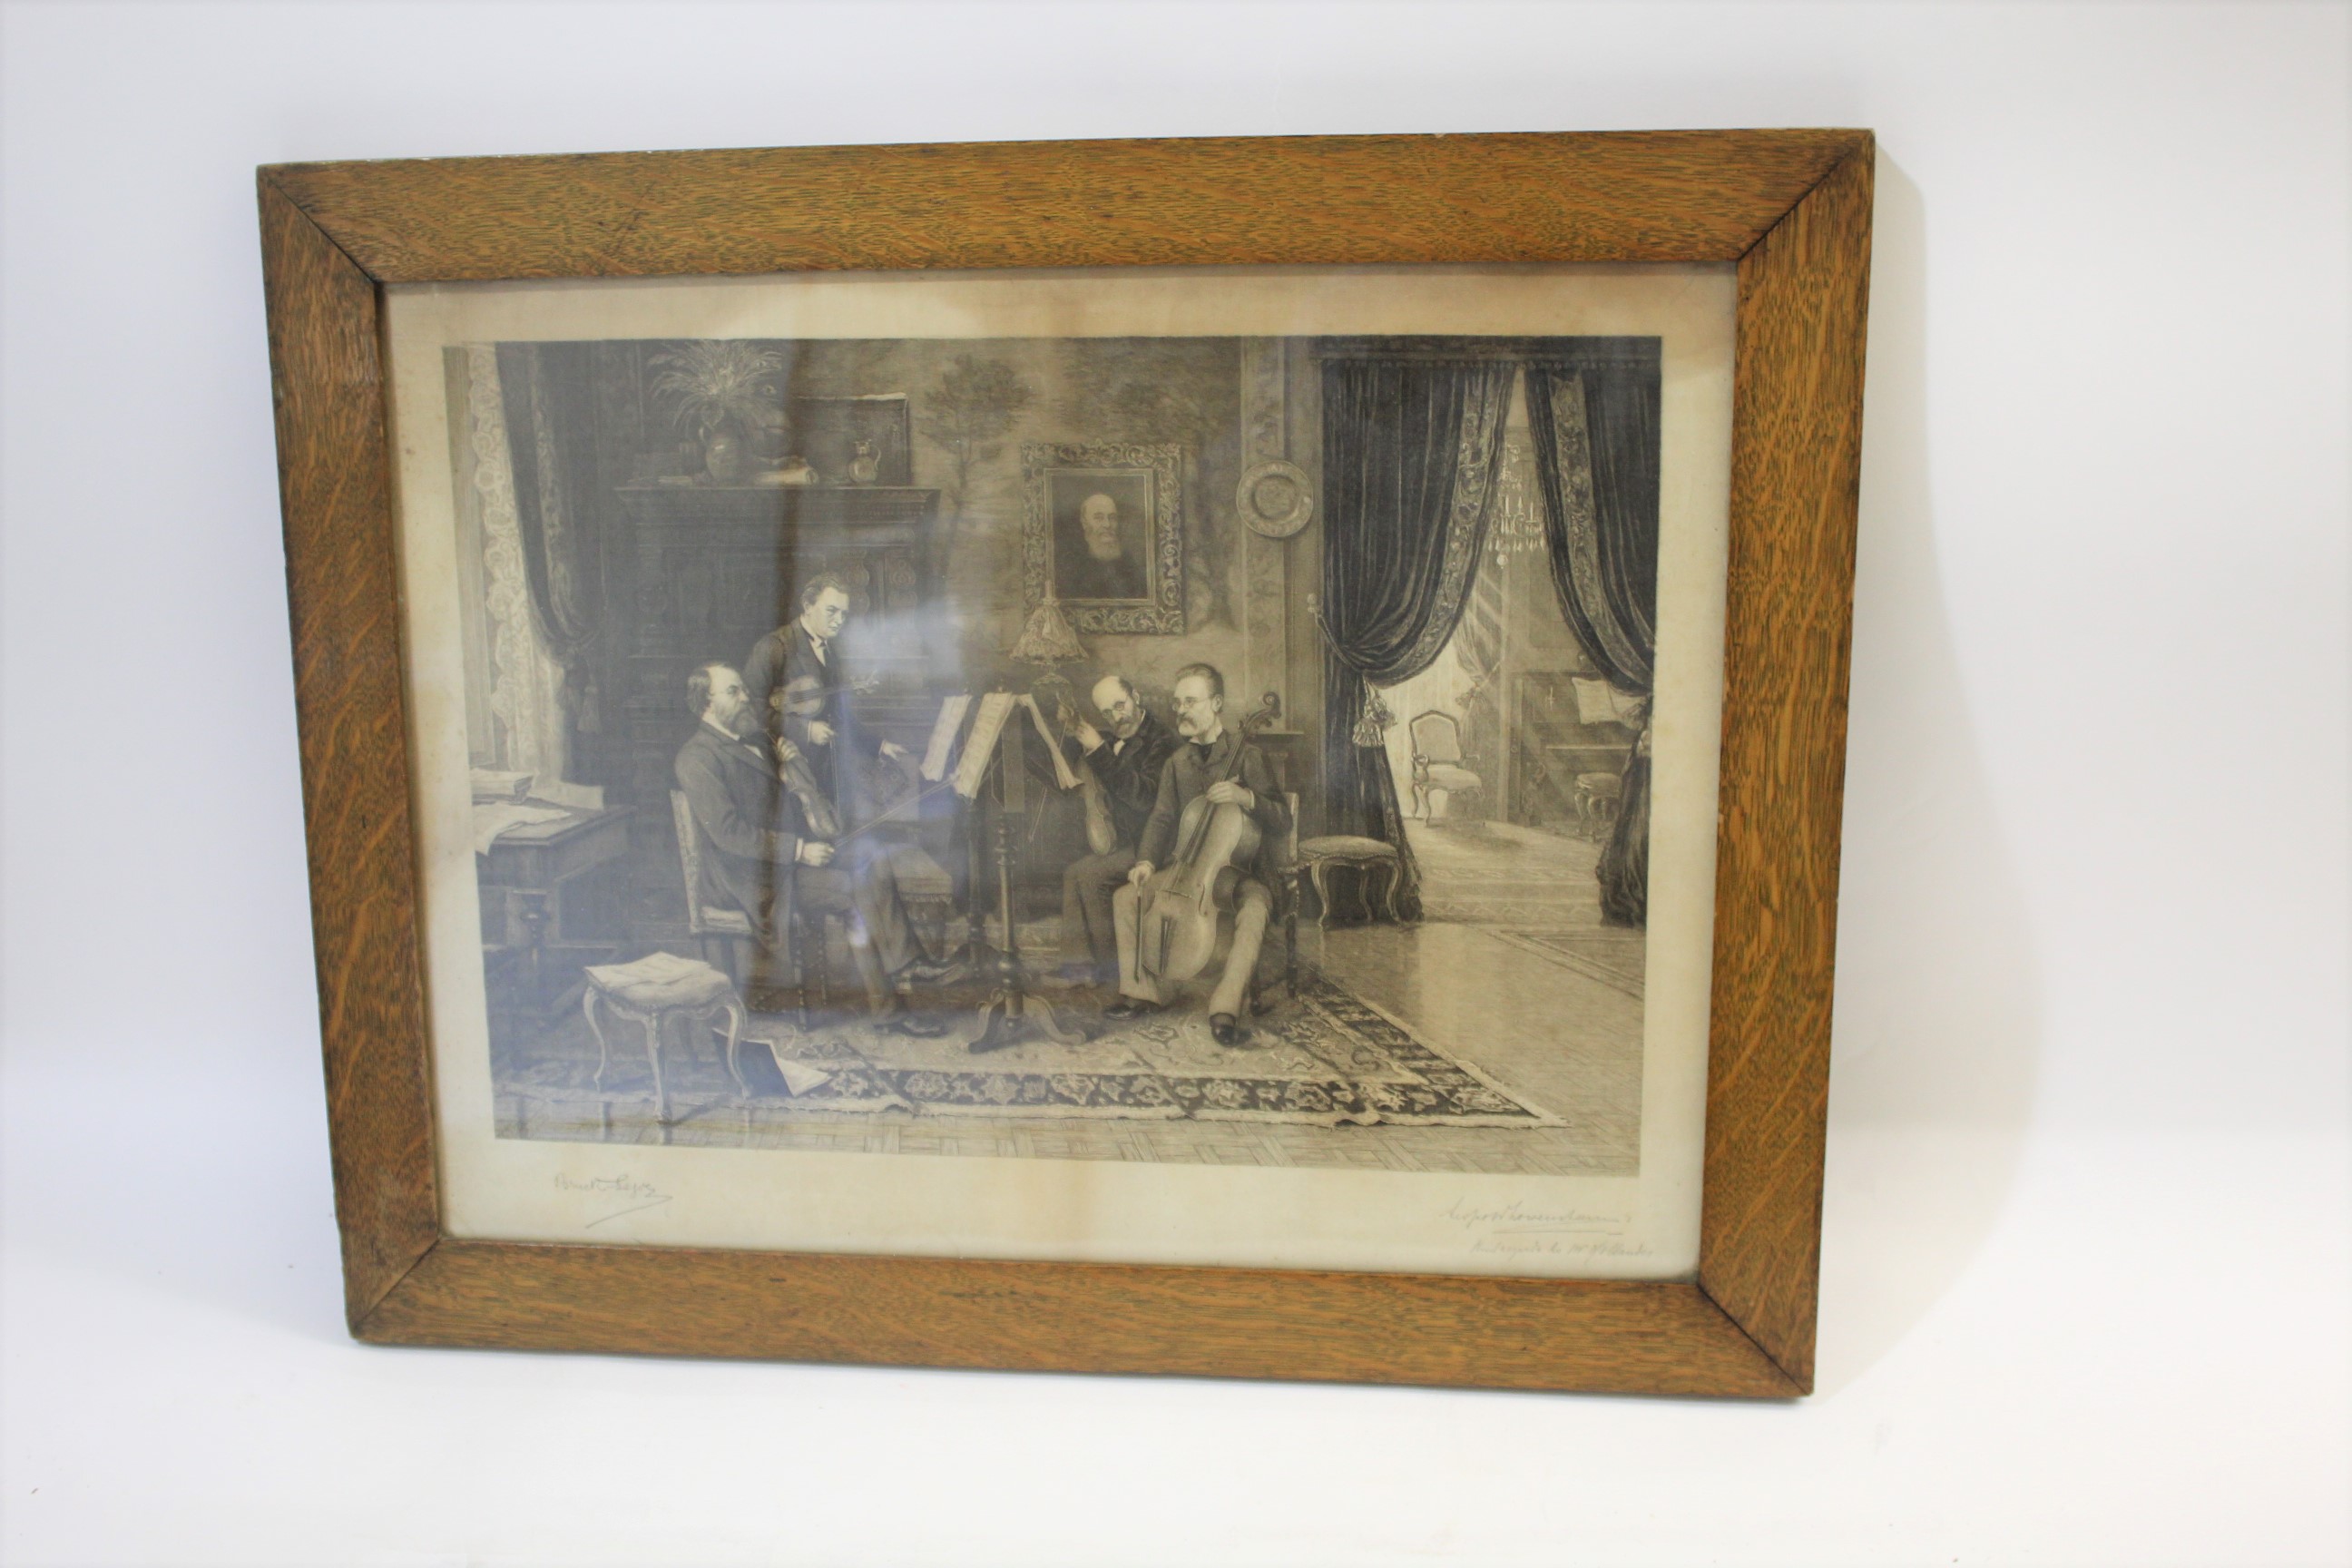 19THC FRAMED ENGRAVING - THE 'JOACHIM QUARTET' a 19thc framed engraving of 4 musicians, signed by